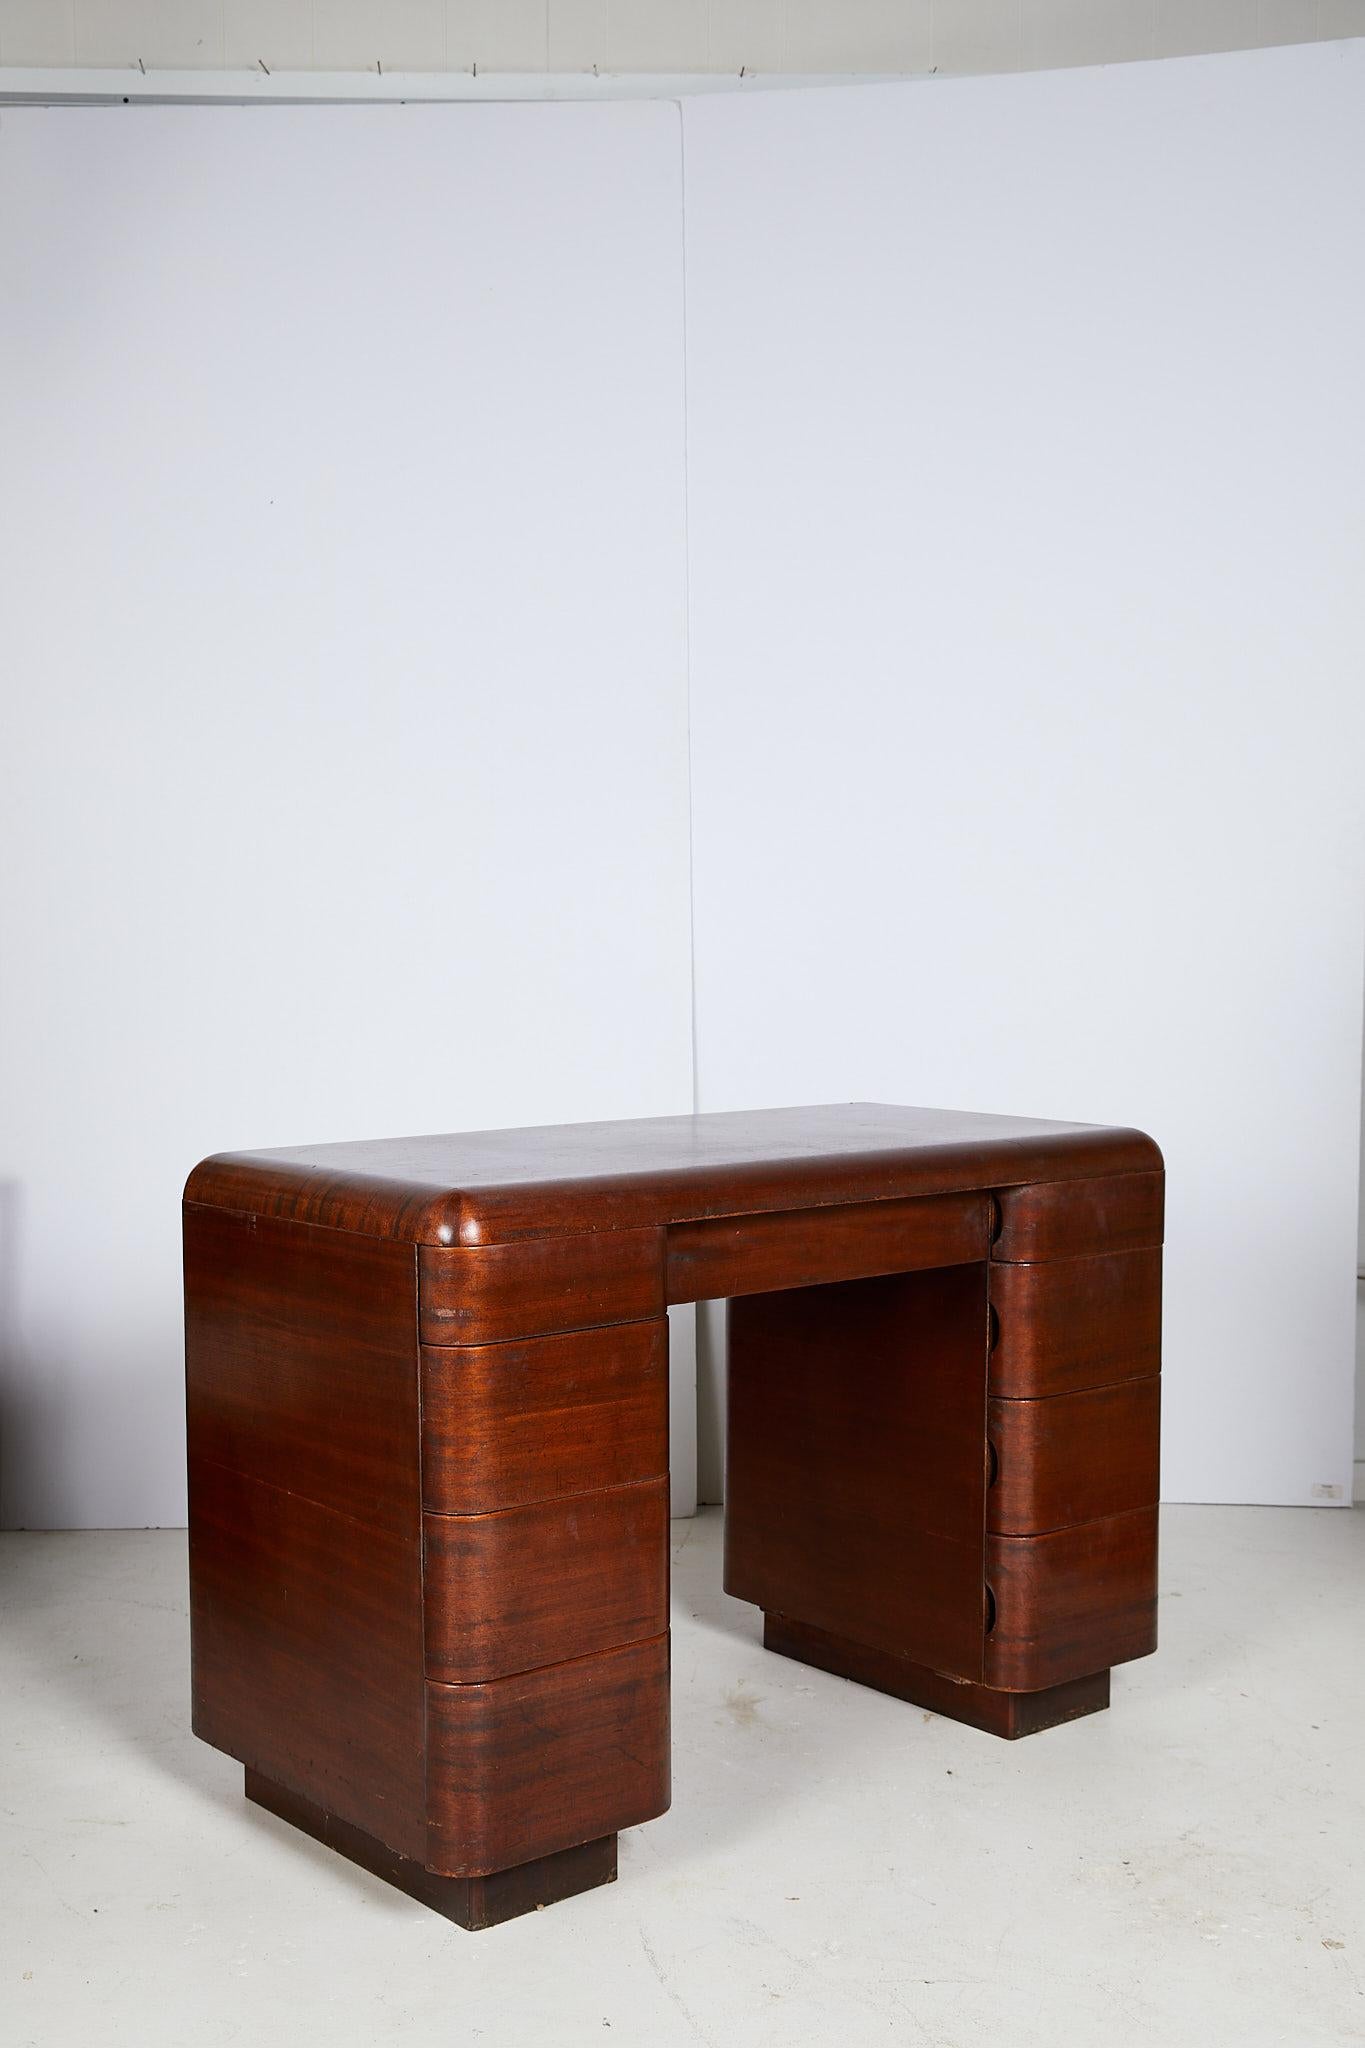 American Art Deco Streamlined Bentwood Pedestal Desk by Paul Goldman for Plymold Co.